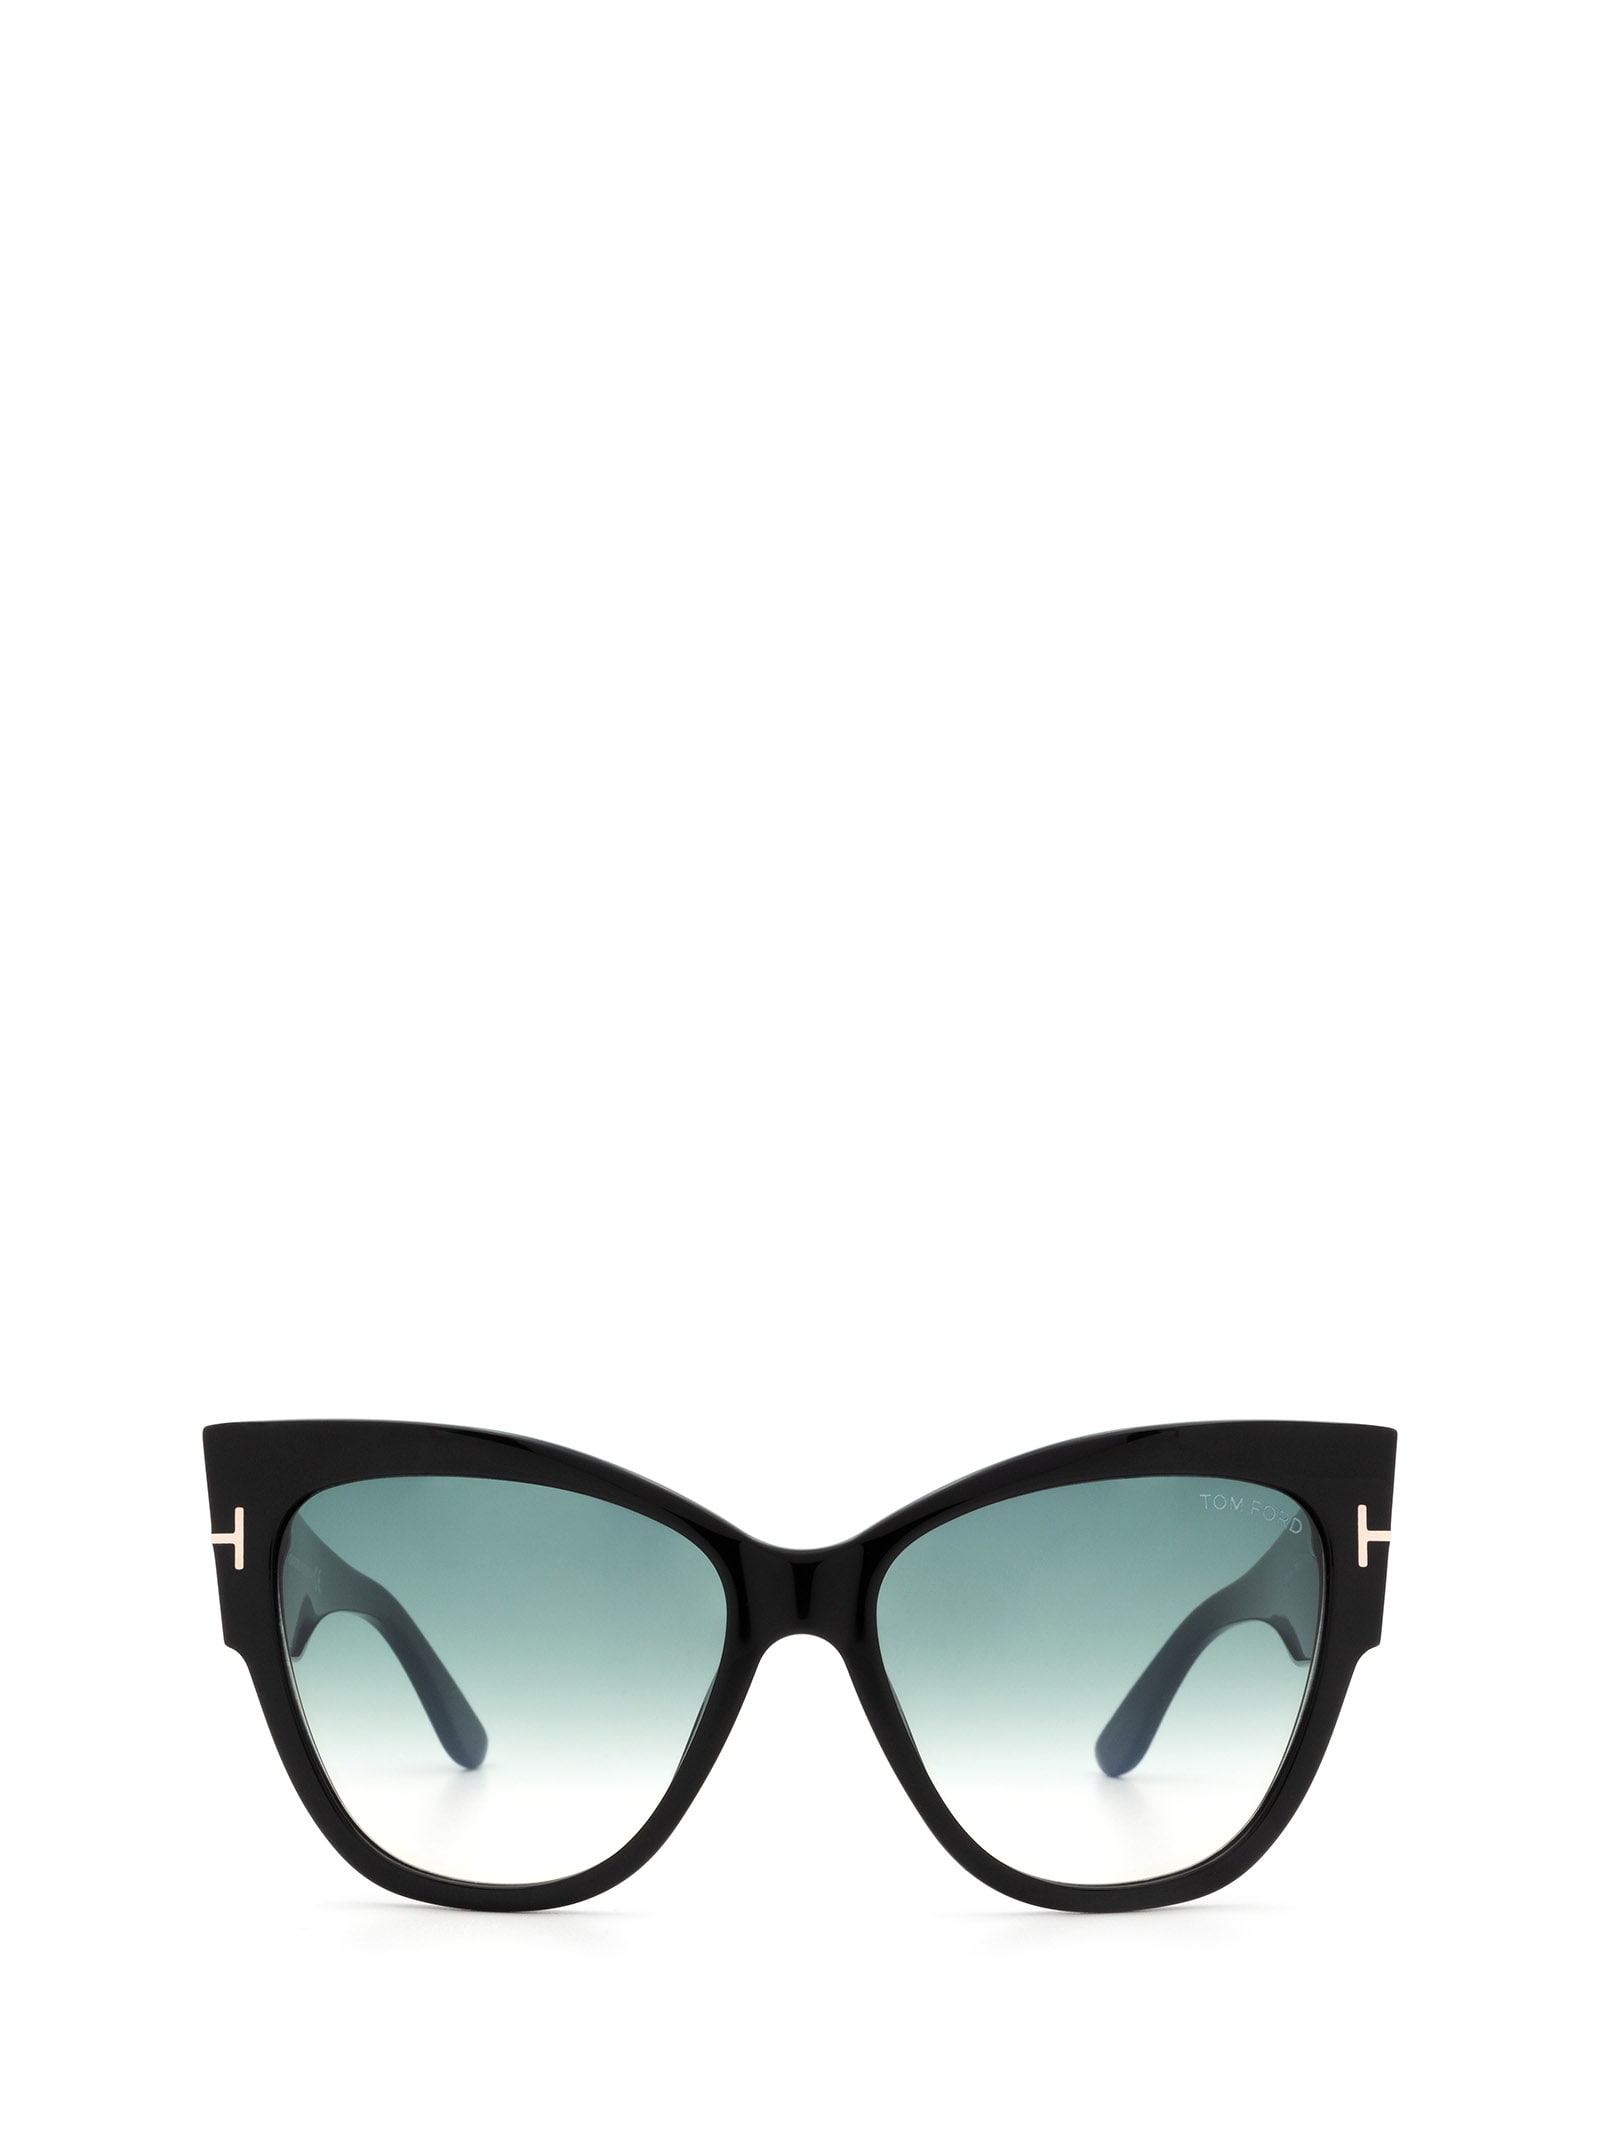 Tom Ford Eyewear Tom Ford Ft0371 Shiny Black Sunglasses